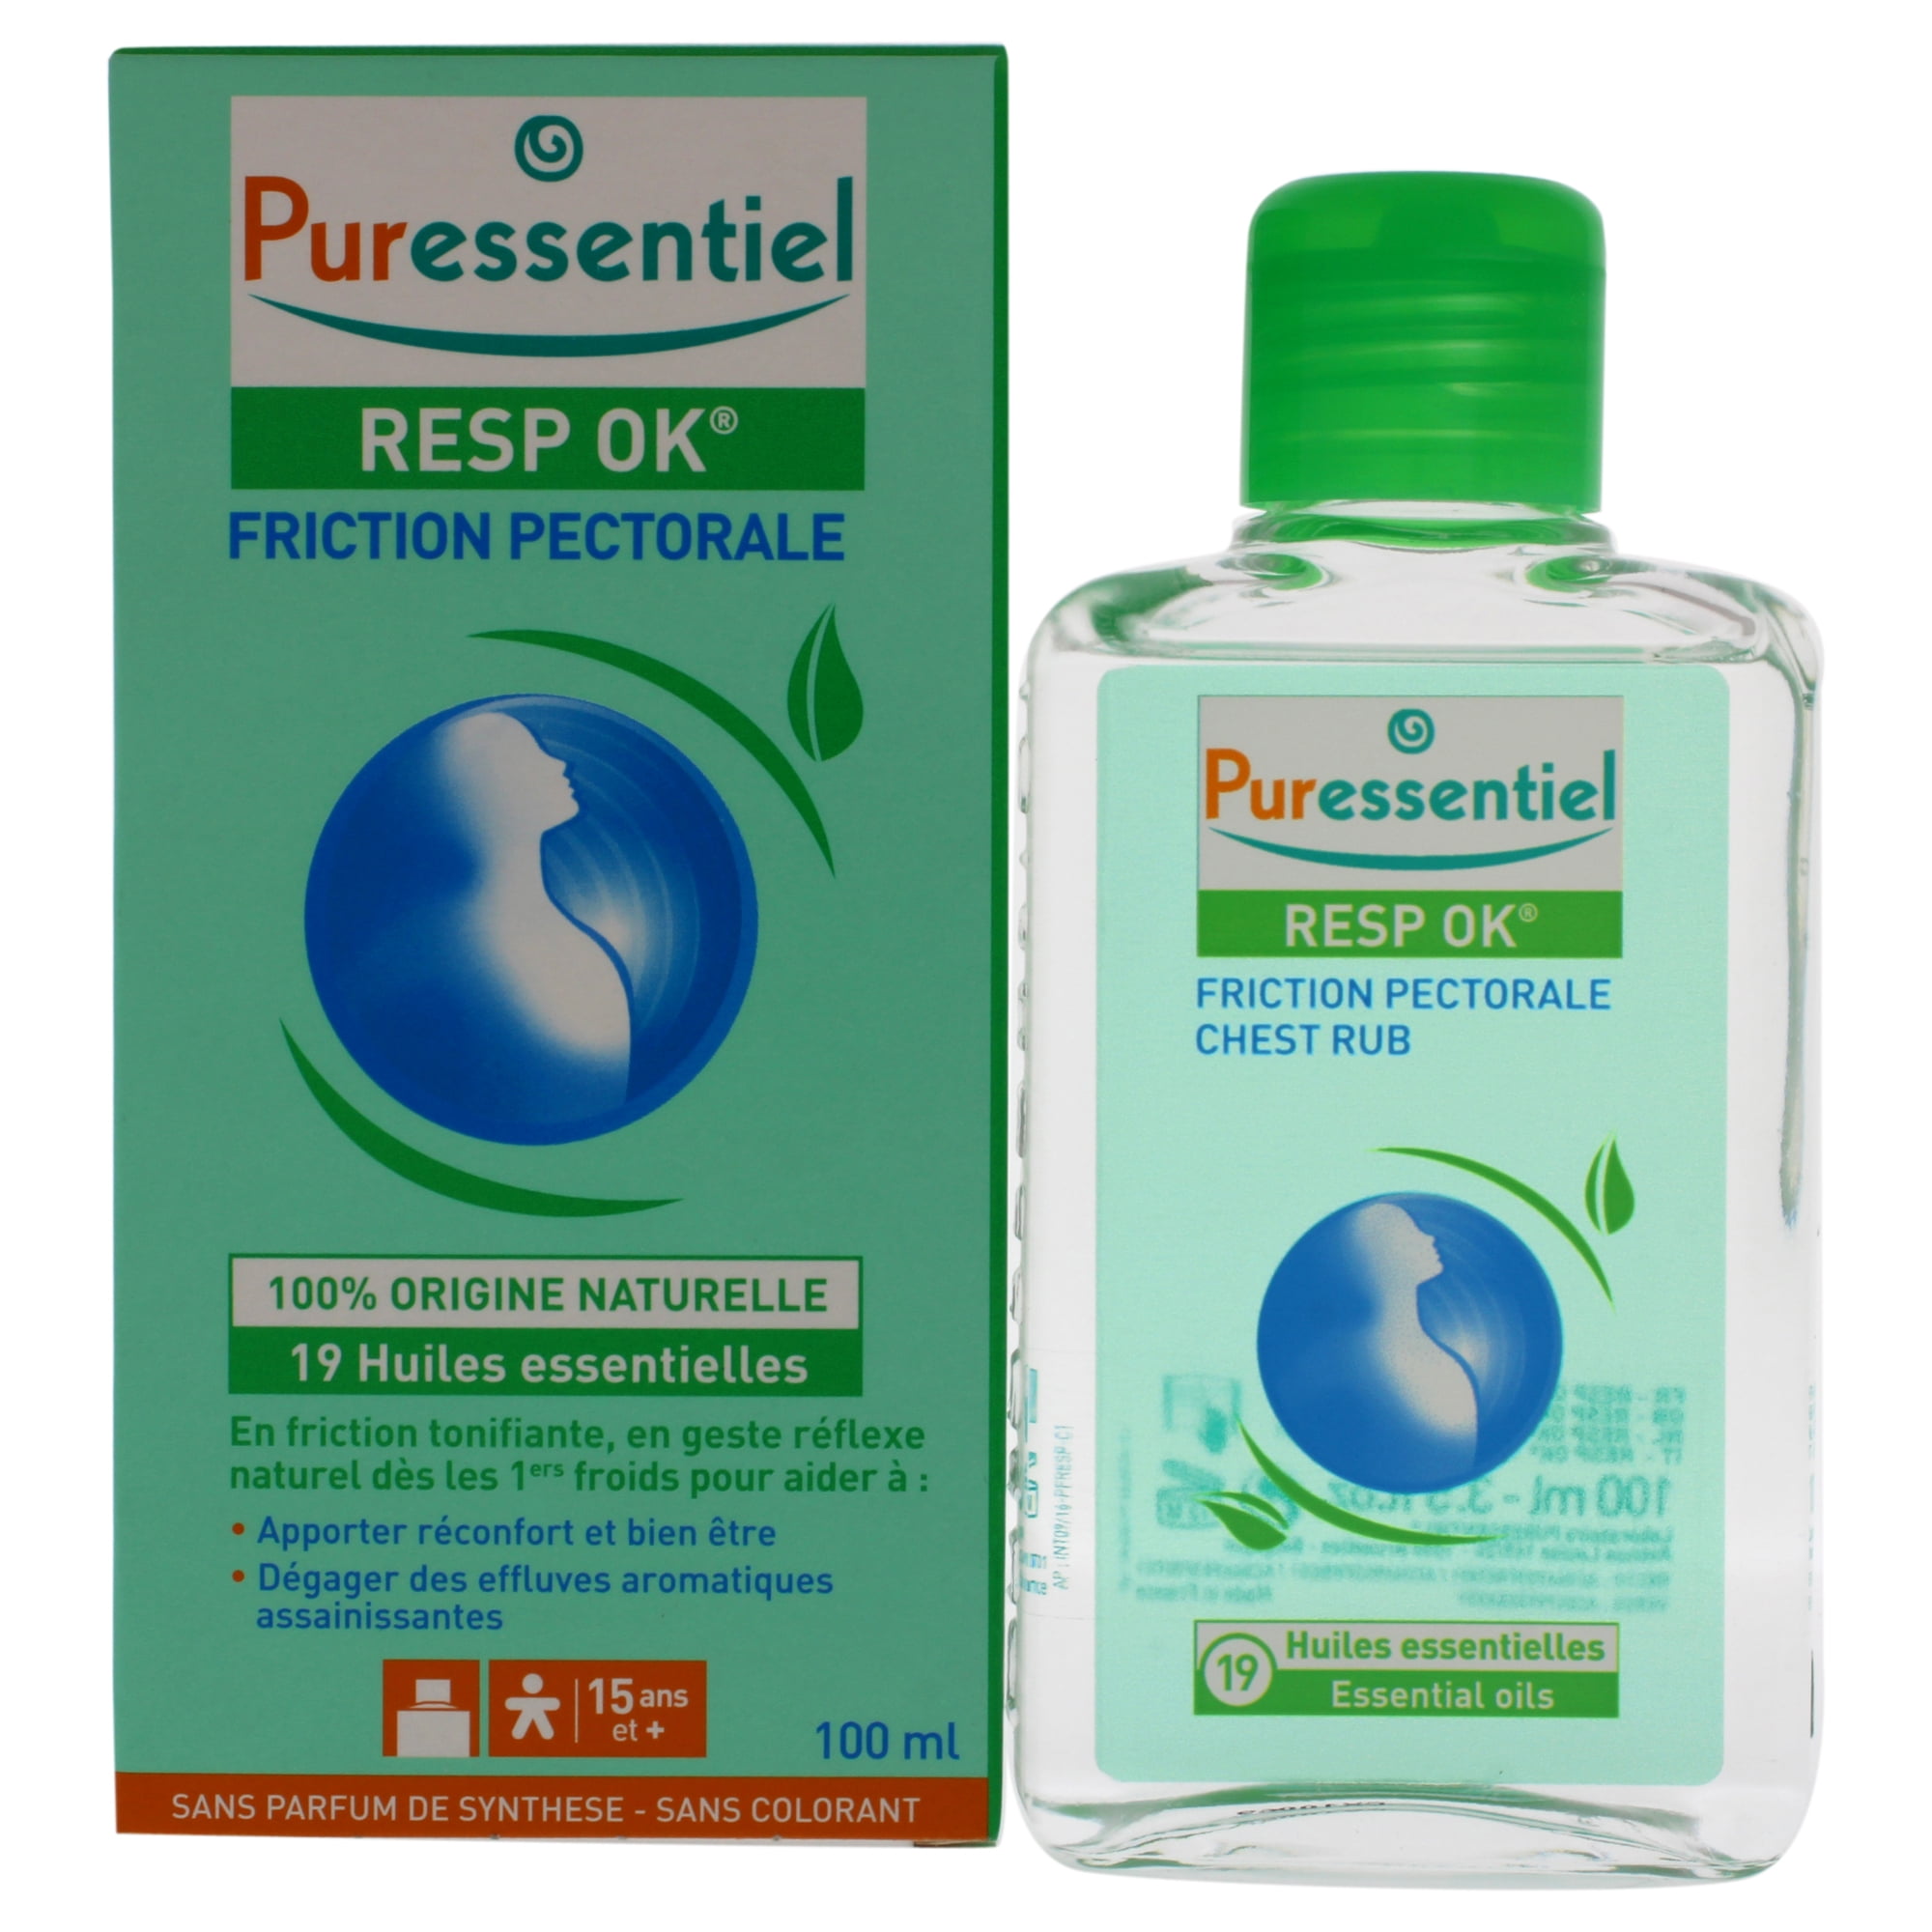 Puressentiel Resp OK Chest Rub, Cough Suppressant Ointment, 3.35 oz